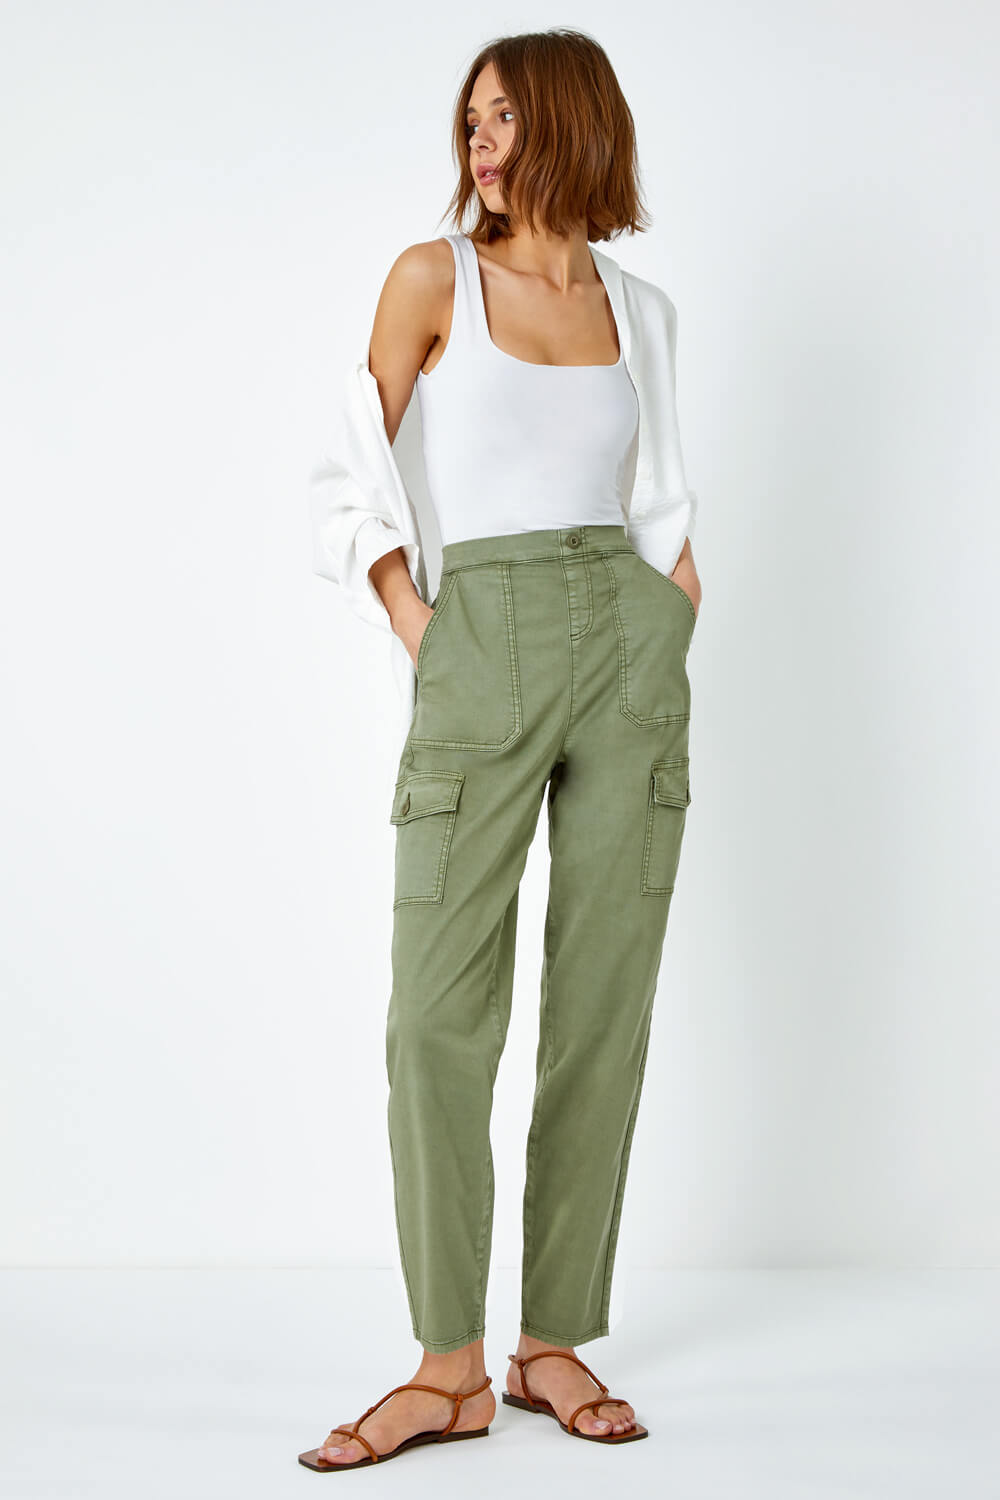 Loose Pants for Women Casual Summer Womens Baggy Cargo Pants Streetwear Hip  Hop | eBay